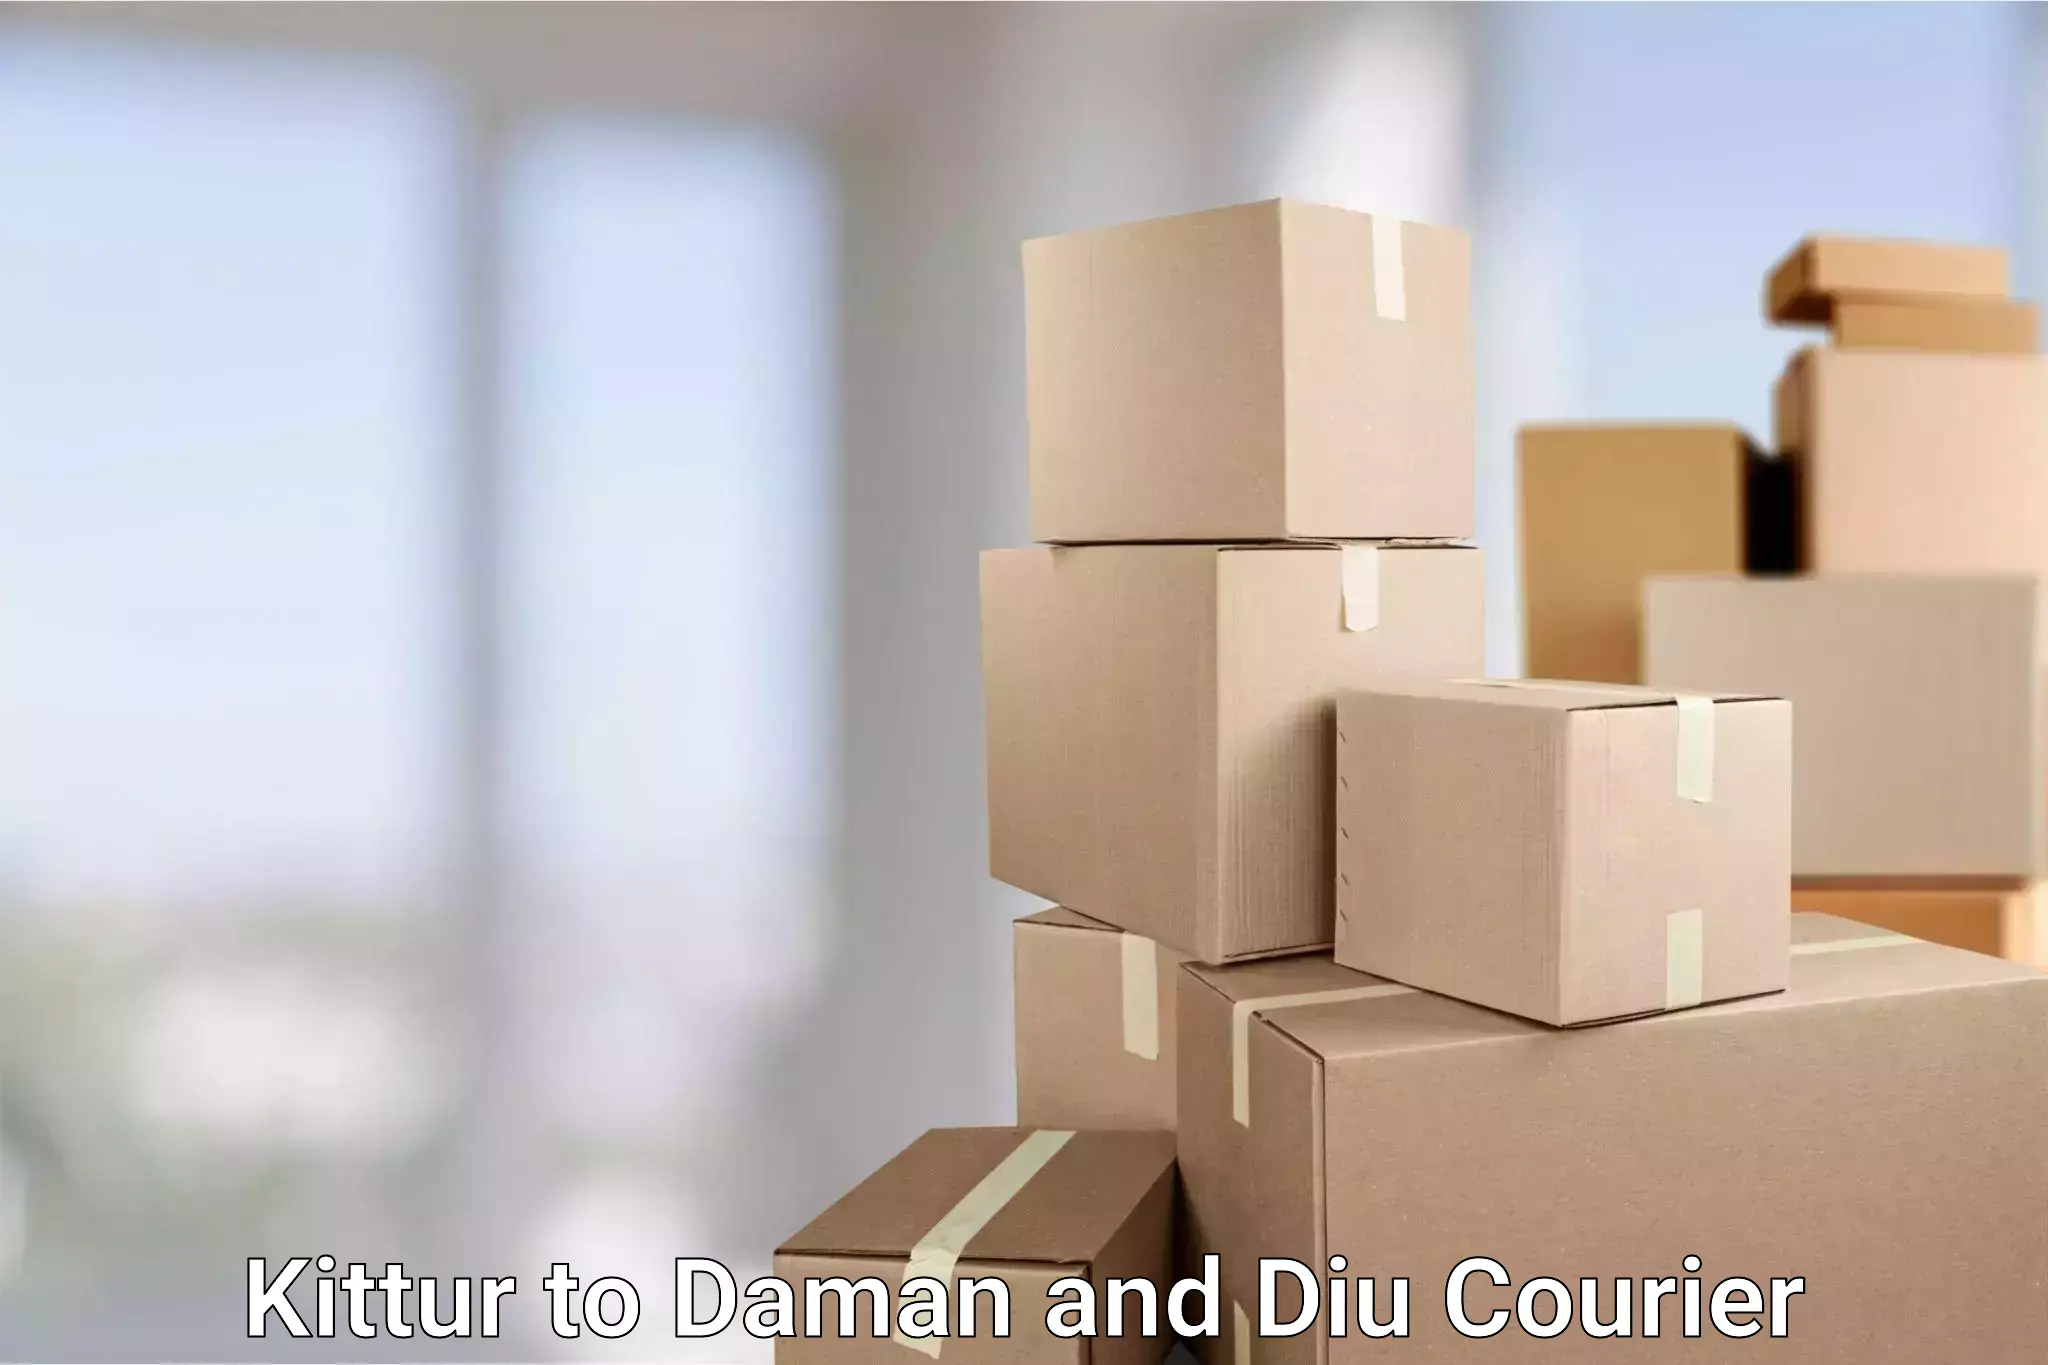 Logistics service provider Kittur to Daman and Diu